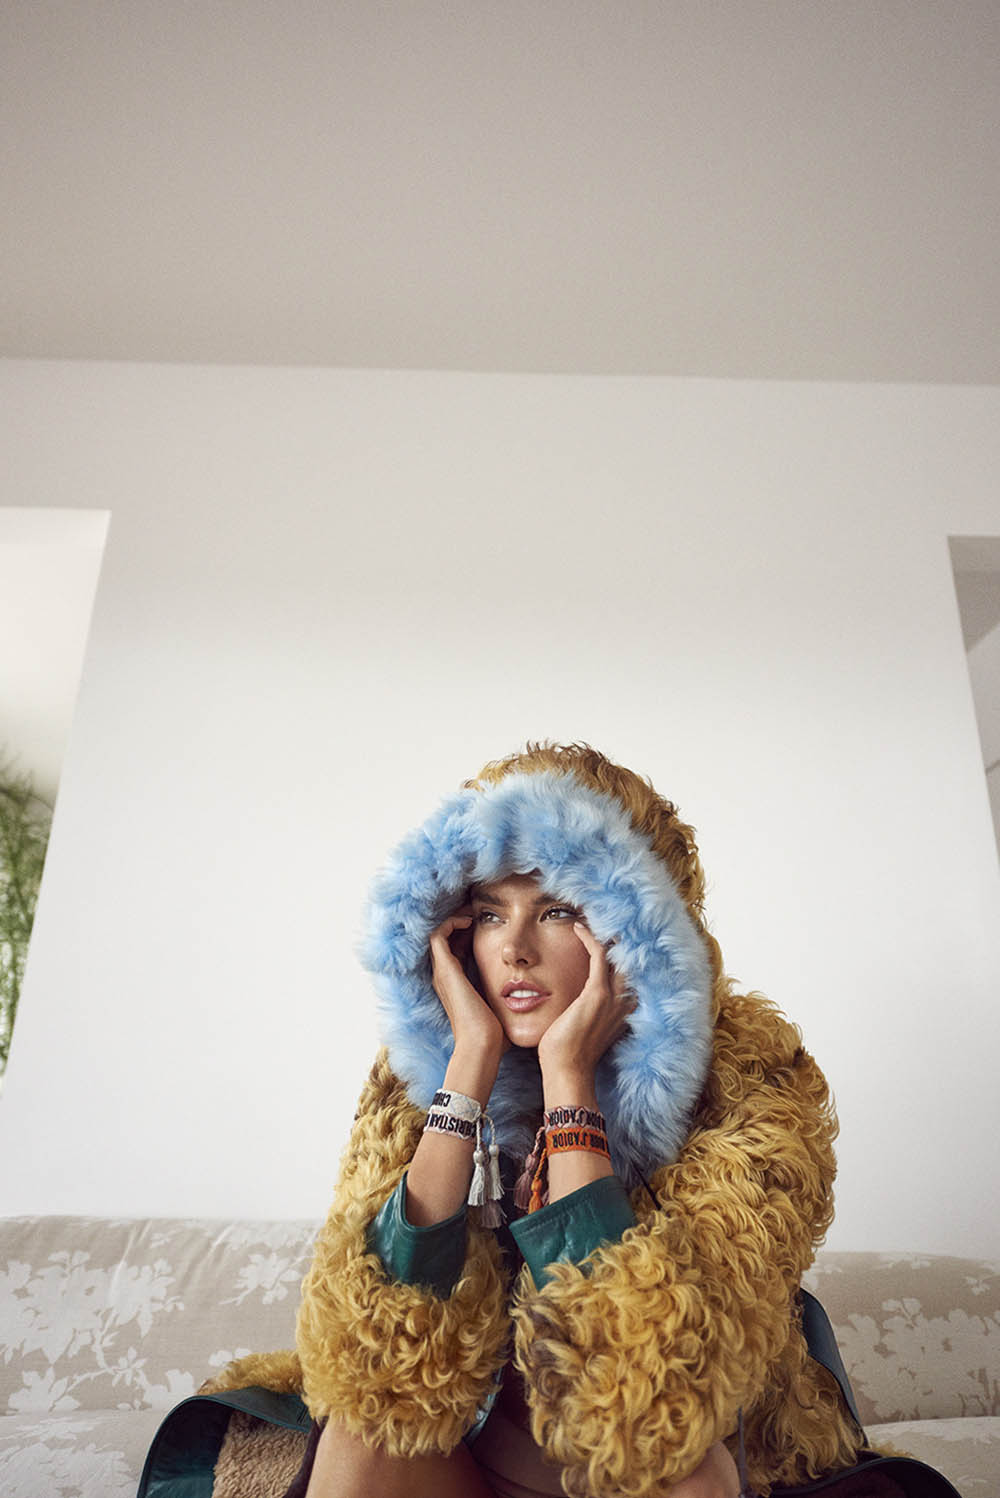 Alessandra Ambrosio covers Vogue Portugal January 2018 by Branislav Simoncik